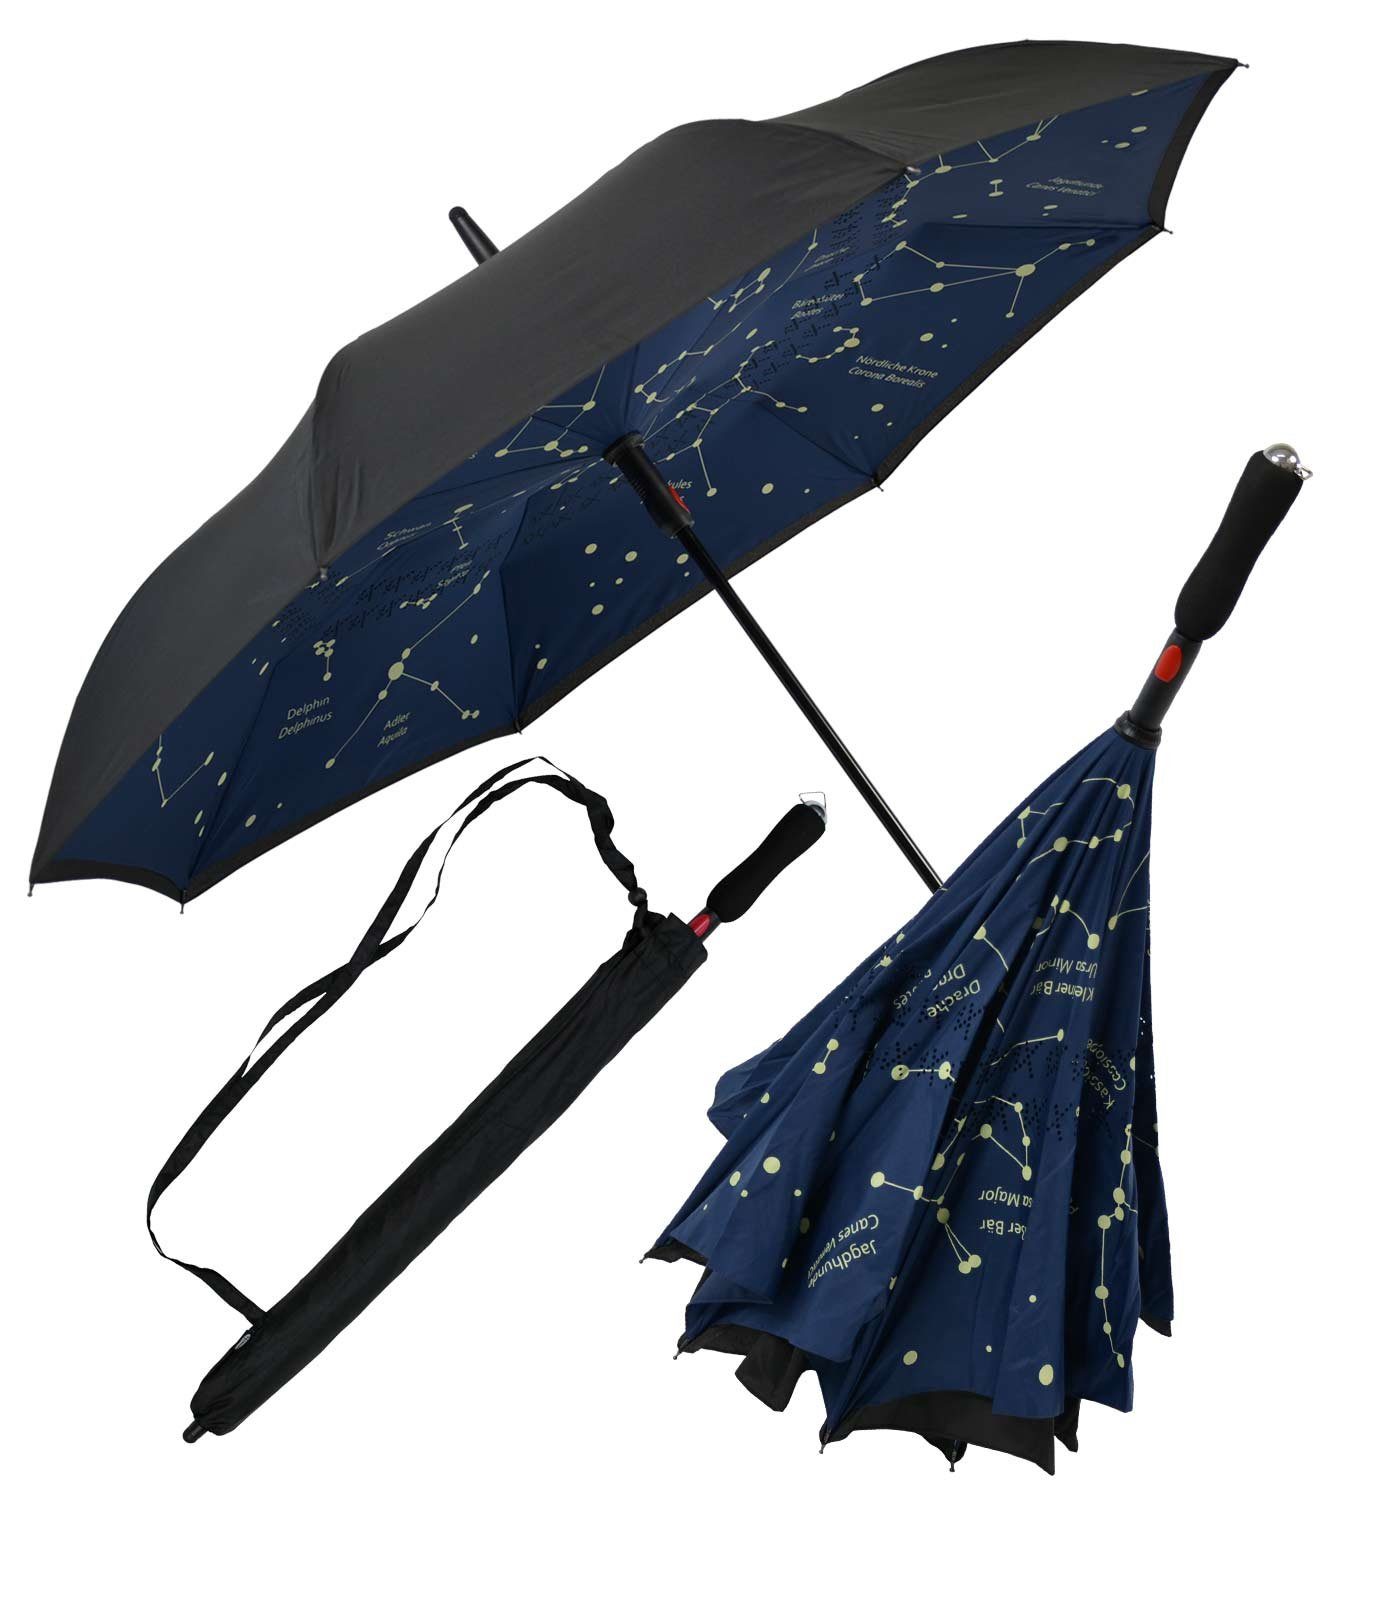 iX-brella Langregenschirm Reverse-Schirm - umgedreht zu öffnen mit Automatik, bedruckt Astro